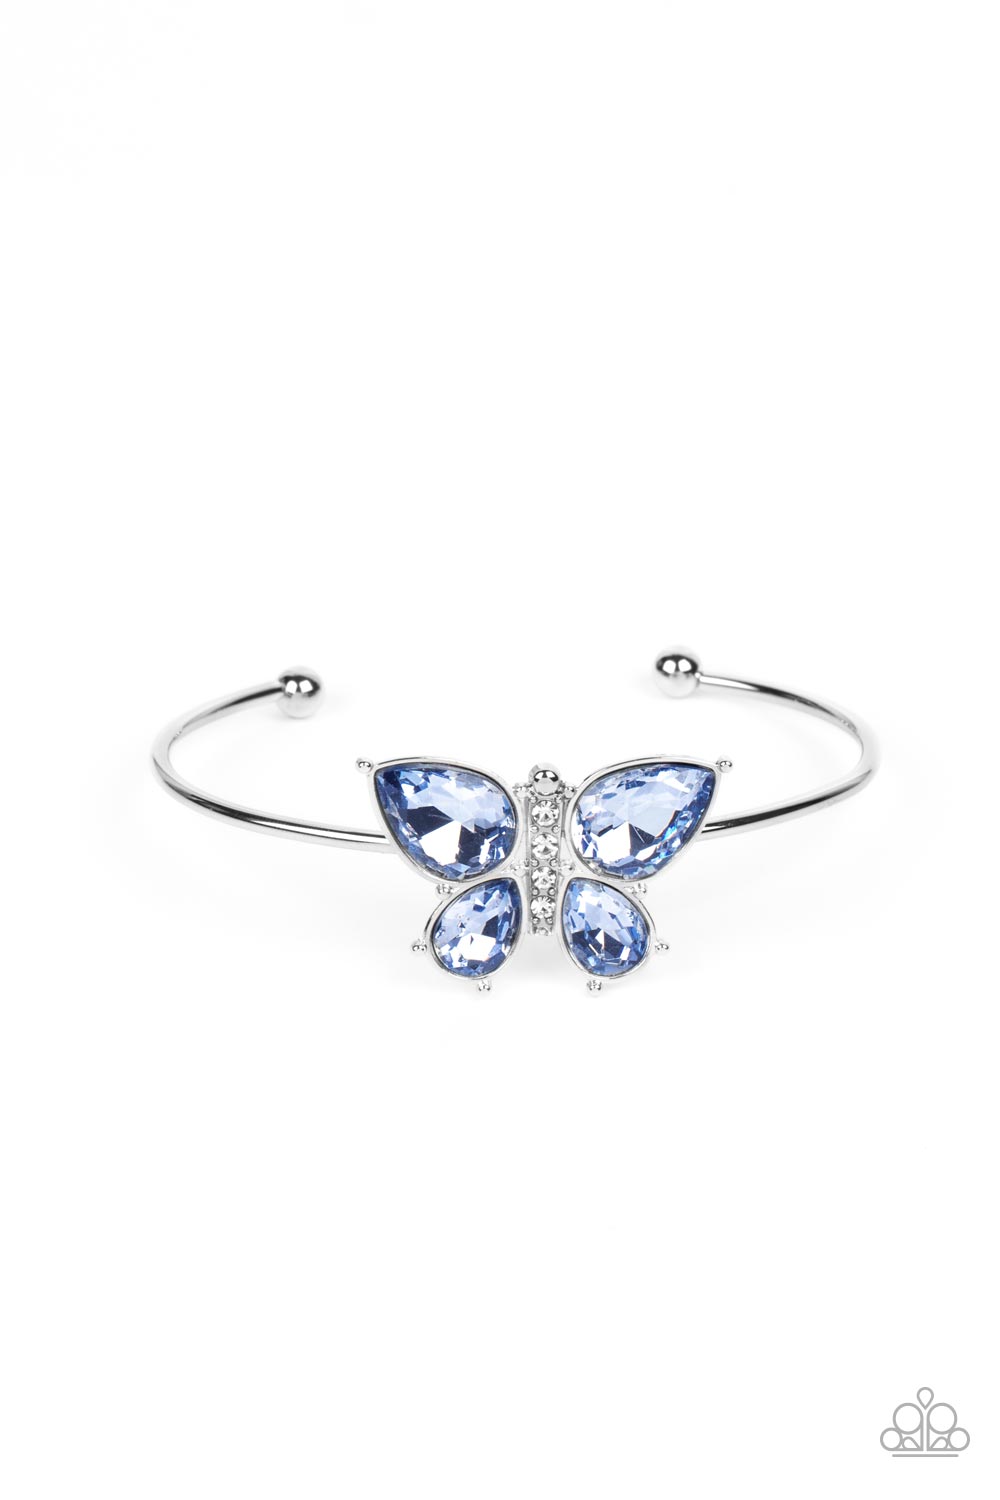 Butterfly Beatitude Blue Rhinestone Butterfly Cuff Bracelet - Paparazzi Accessories- lightbox - CarasShop.com - $5 Jewelry by Cara Jewels